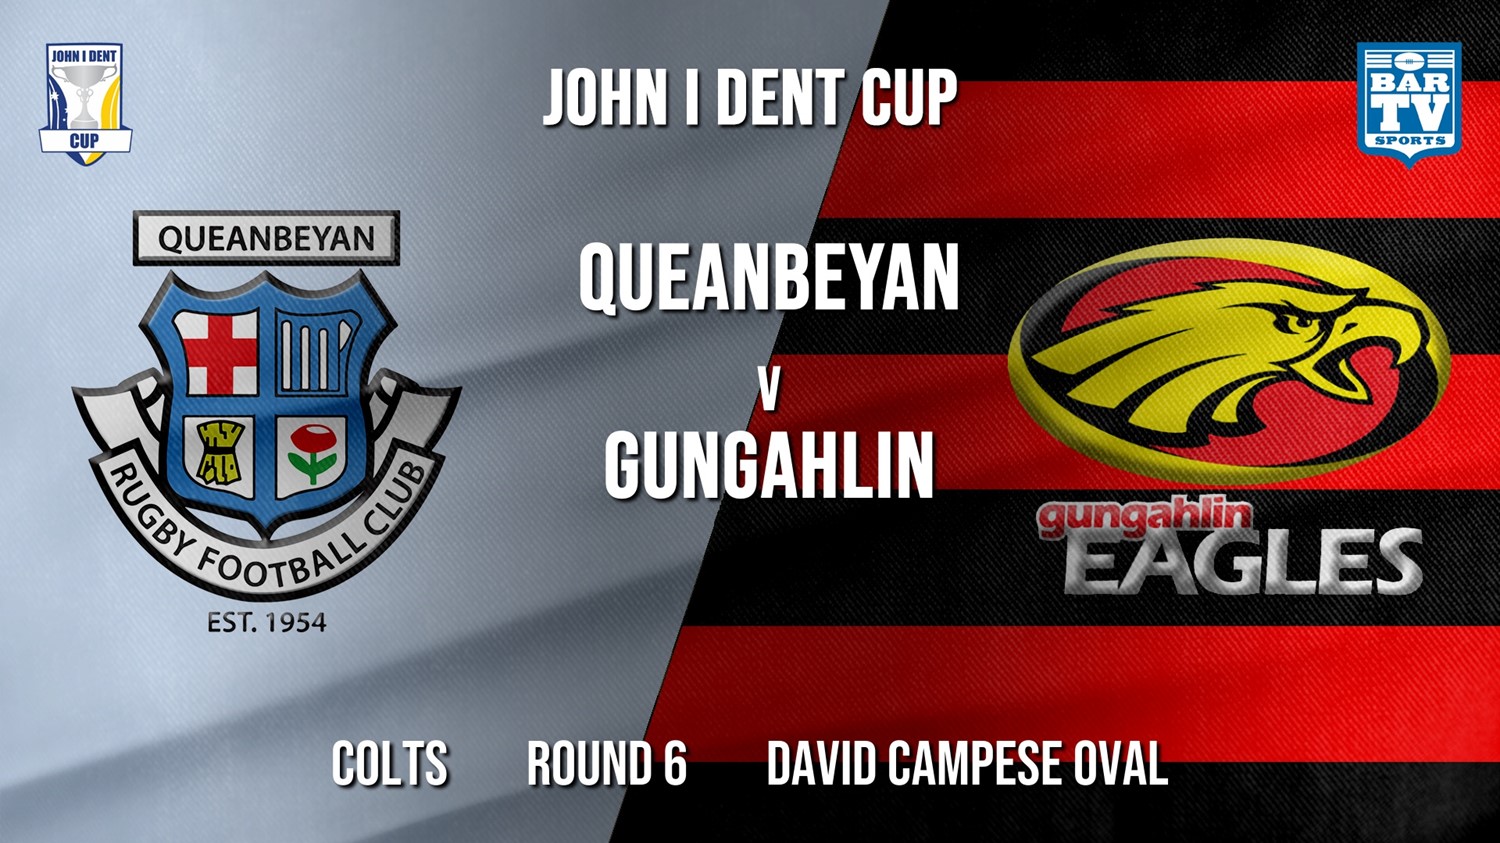 John I Dent Round 6 - Colts - Queanbeyan Whites v Gungahlin Eagles Minigame Slate Image